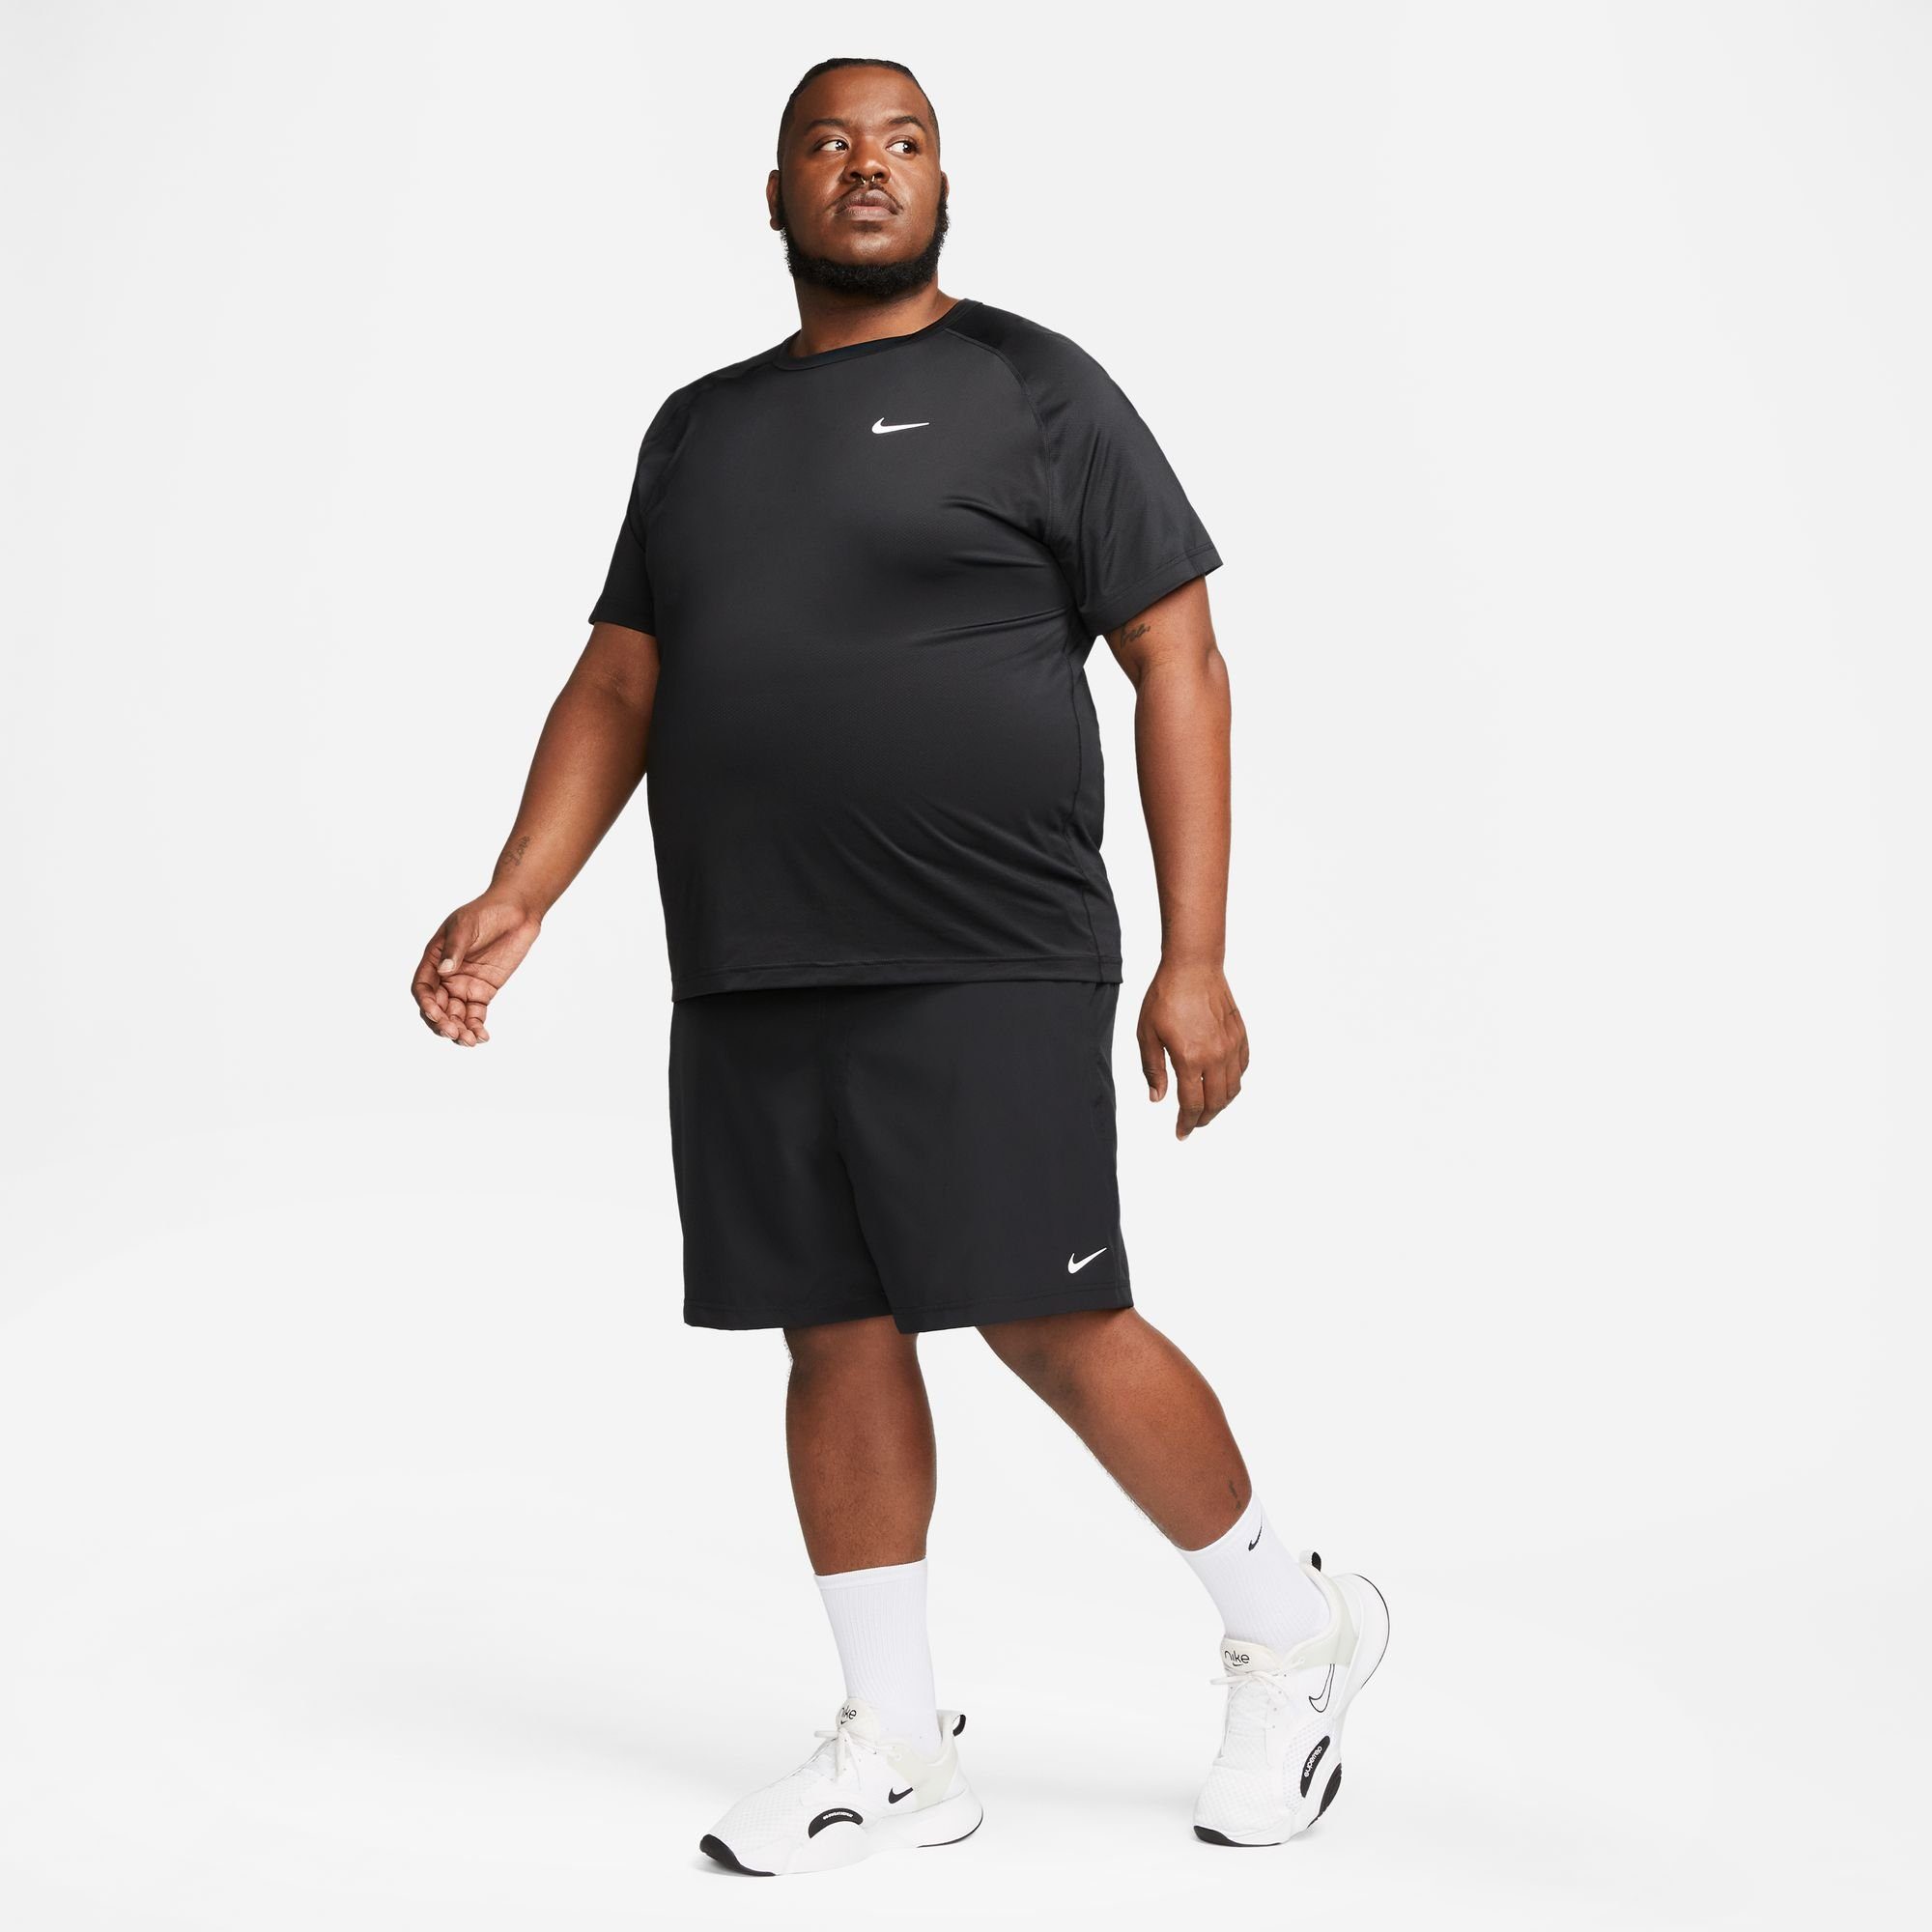 SHORTS MEN'S DRI-FIT UNLINED schwarz FORM Nike VERSATILE Trainingsshorts